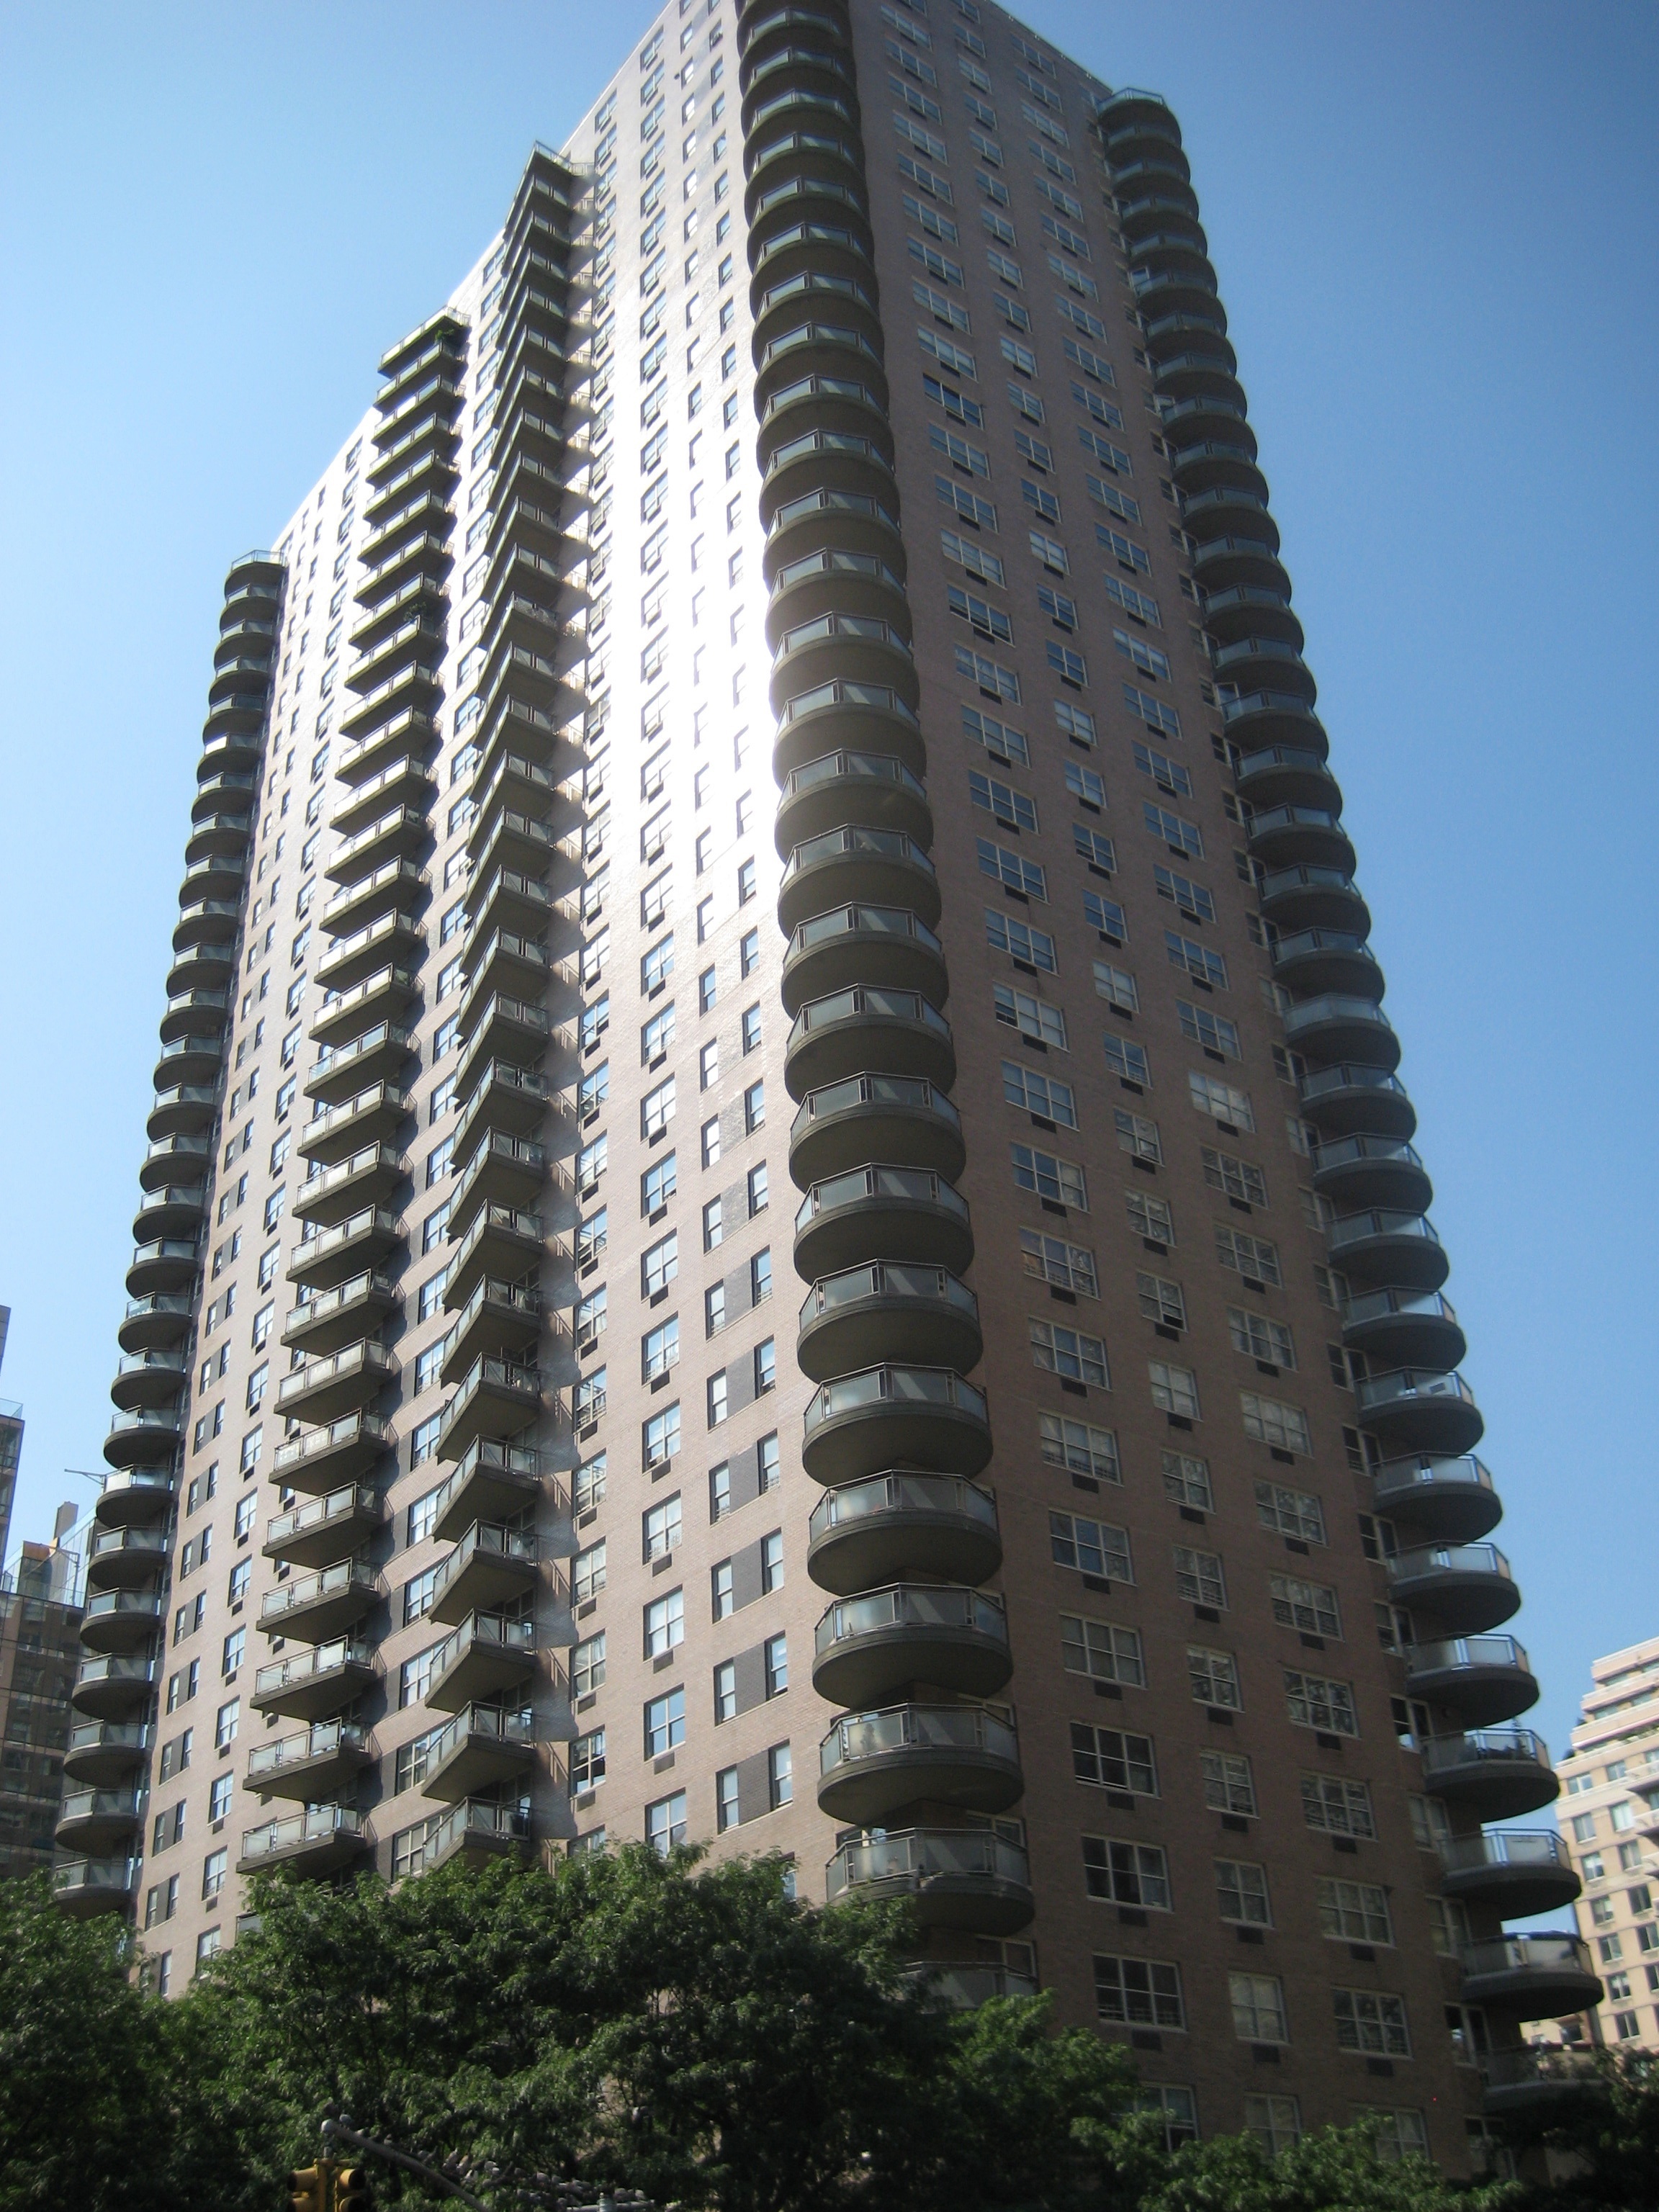 famous Upper East Side high-rise buildings | Ephemeral New York